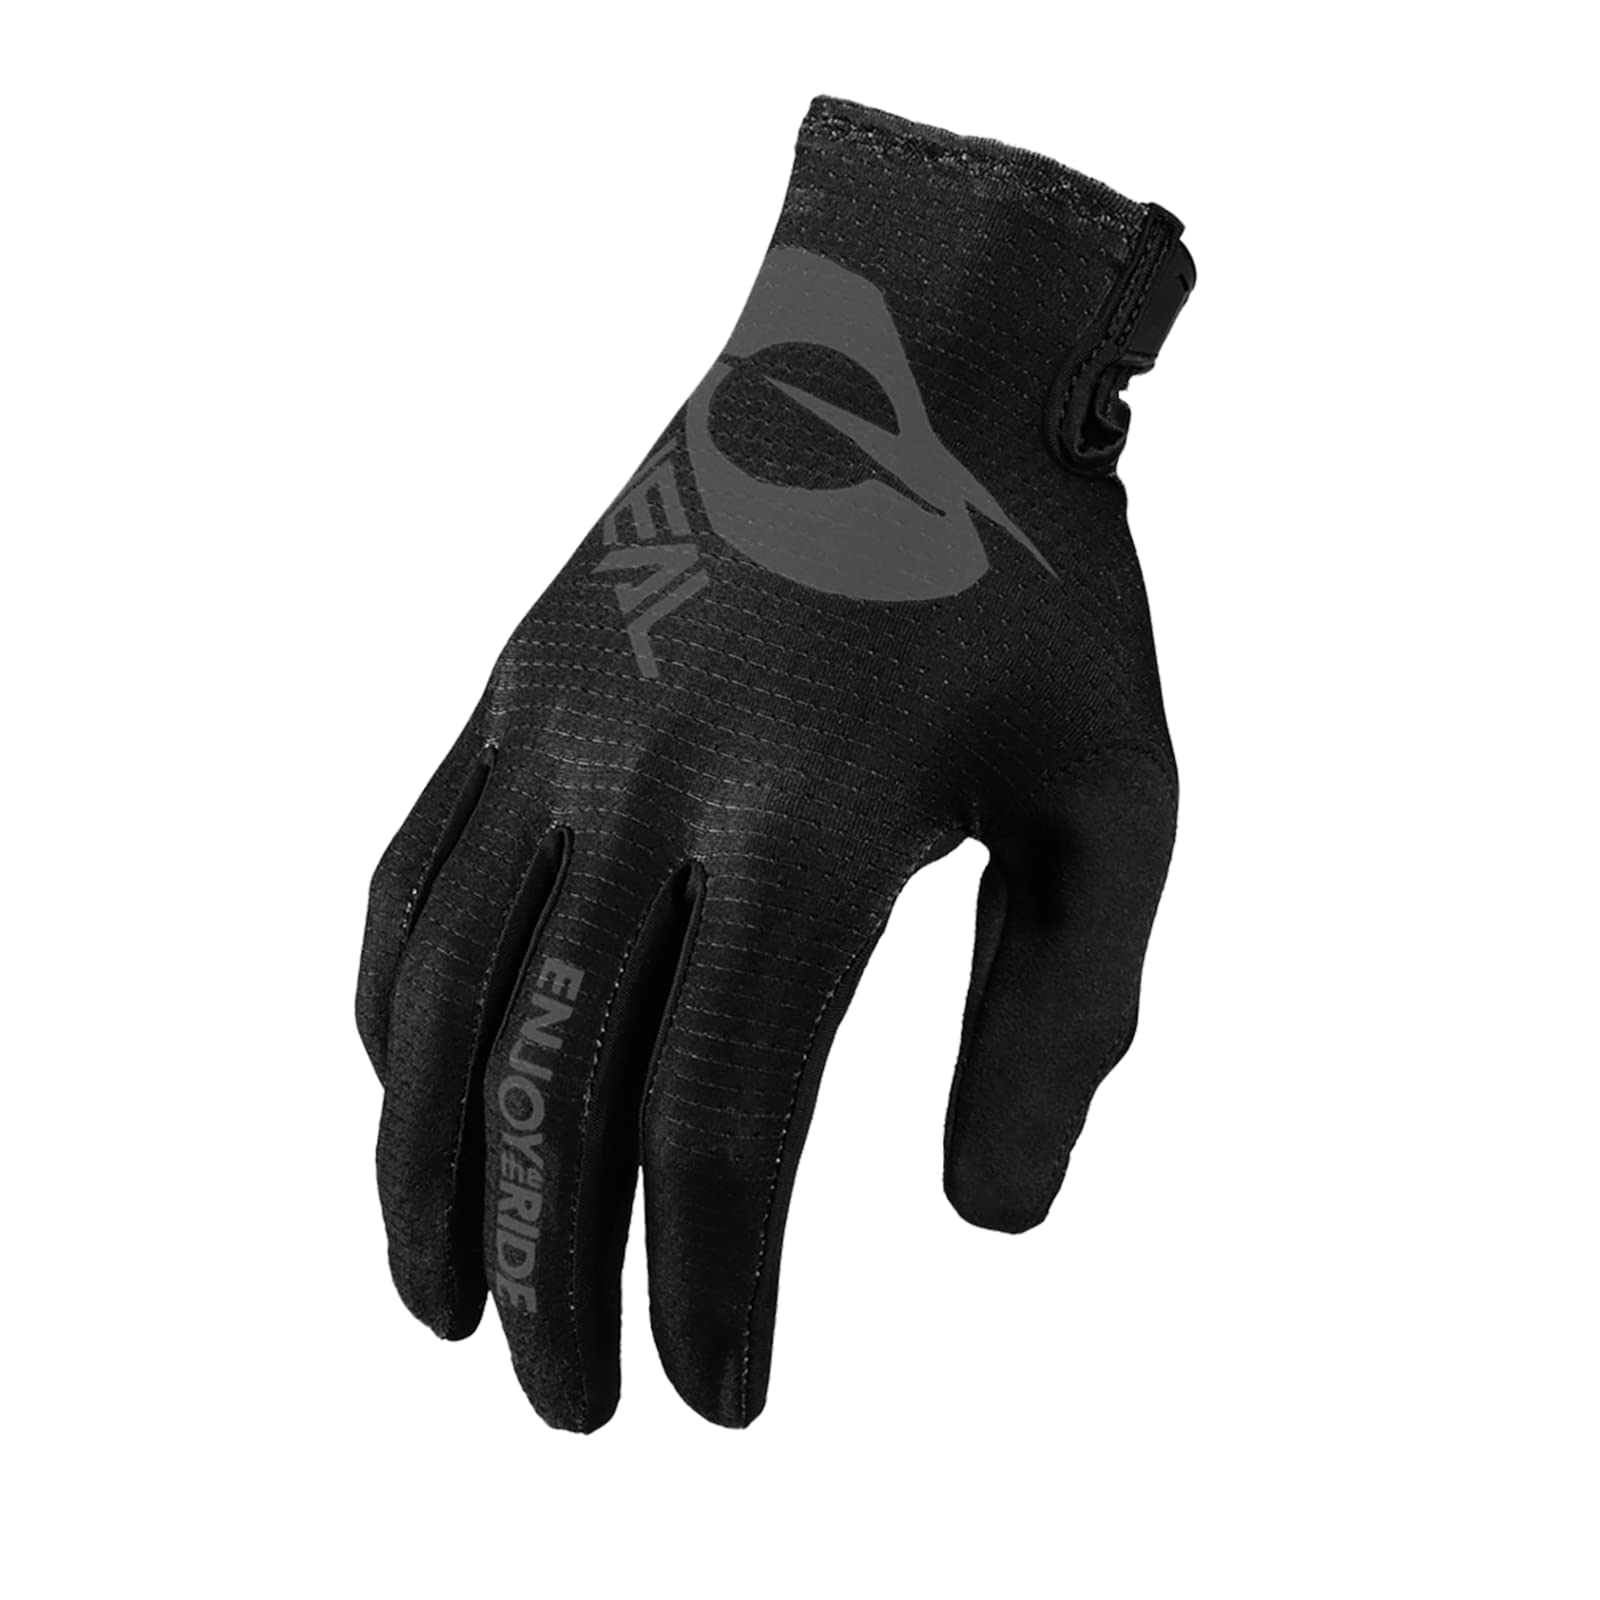 O'NEAL | Fahrrad- & Motocross-Handschuhe | MX MTB DH FR Downhill Freeride | Langlebige, Flexible Materialien, belüftete Handoberseite | Matrix Glove | Erwachsene | Schwarz Grau | Größe M von O'NEAL